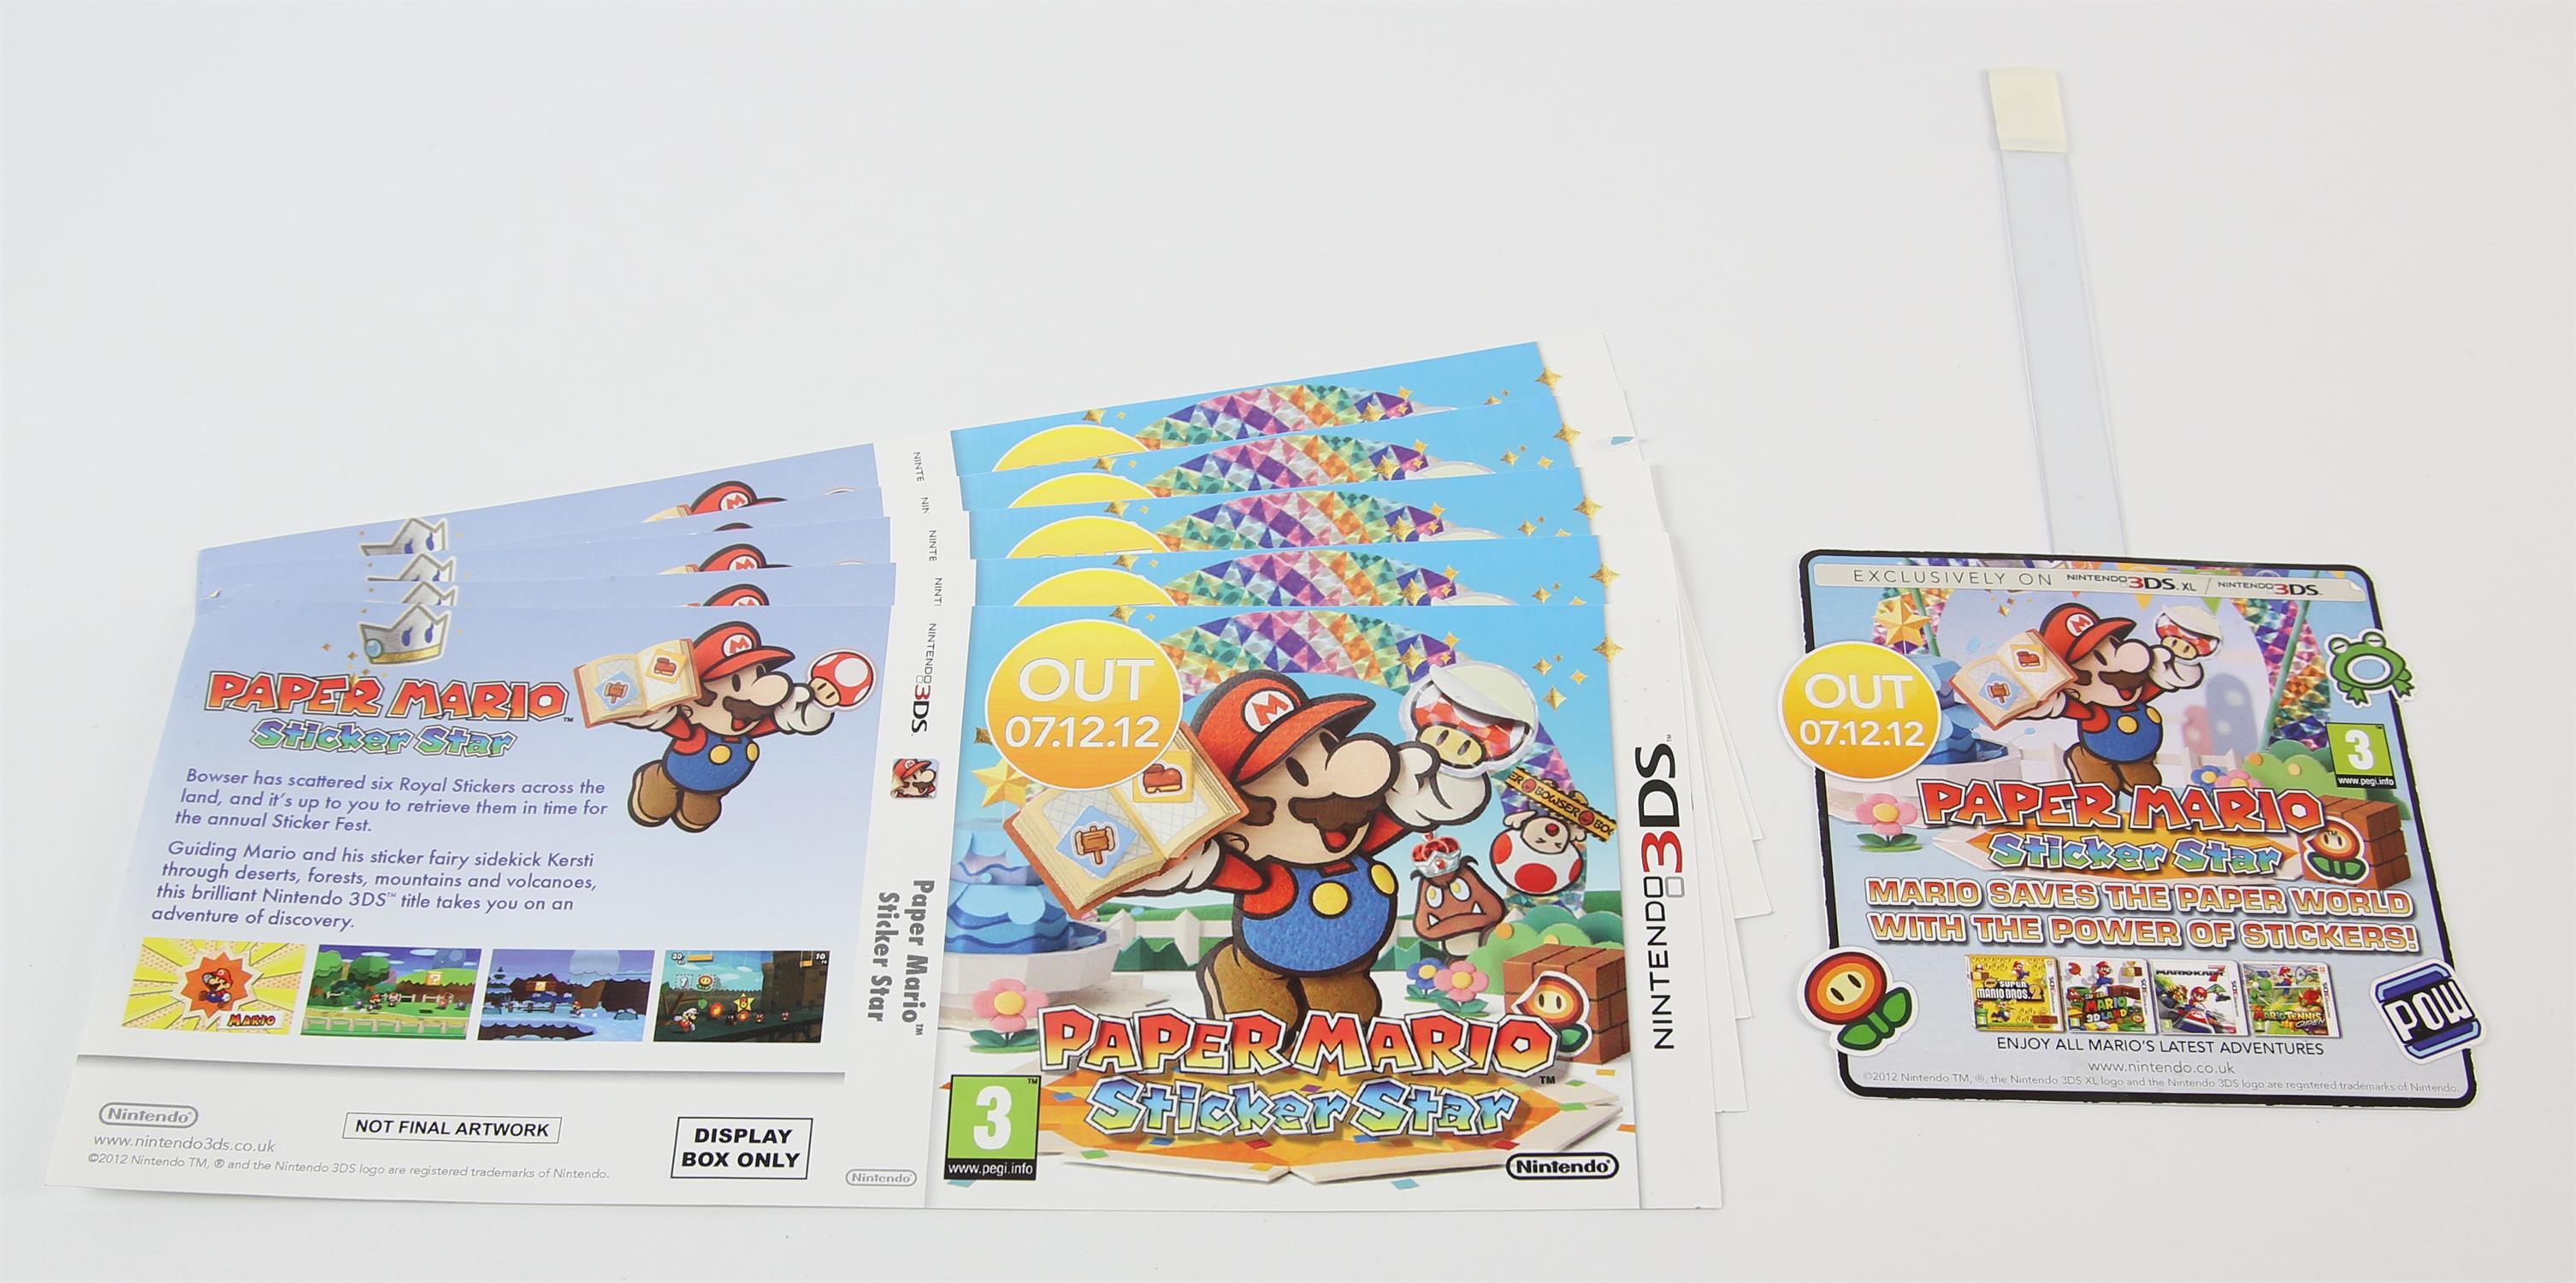 NINTENDO Paper Mario Sticker Star POS pack Includes: display box insert (x5) wobbler (x1)